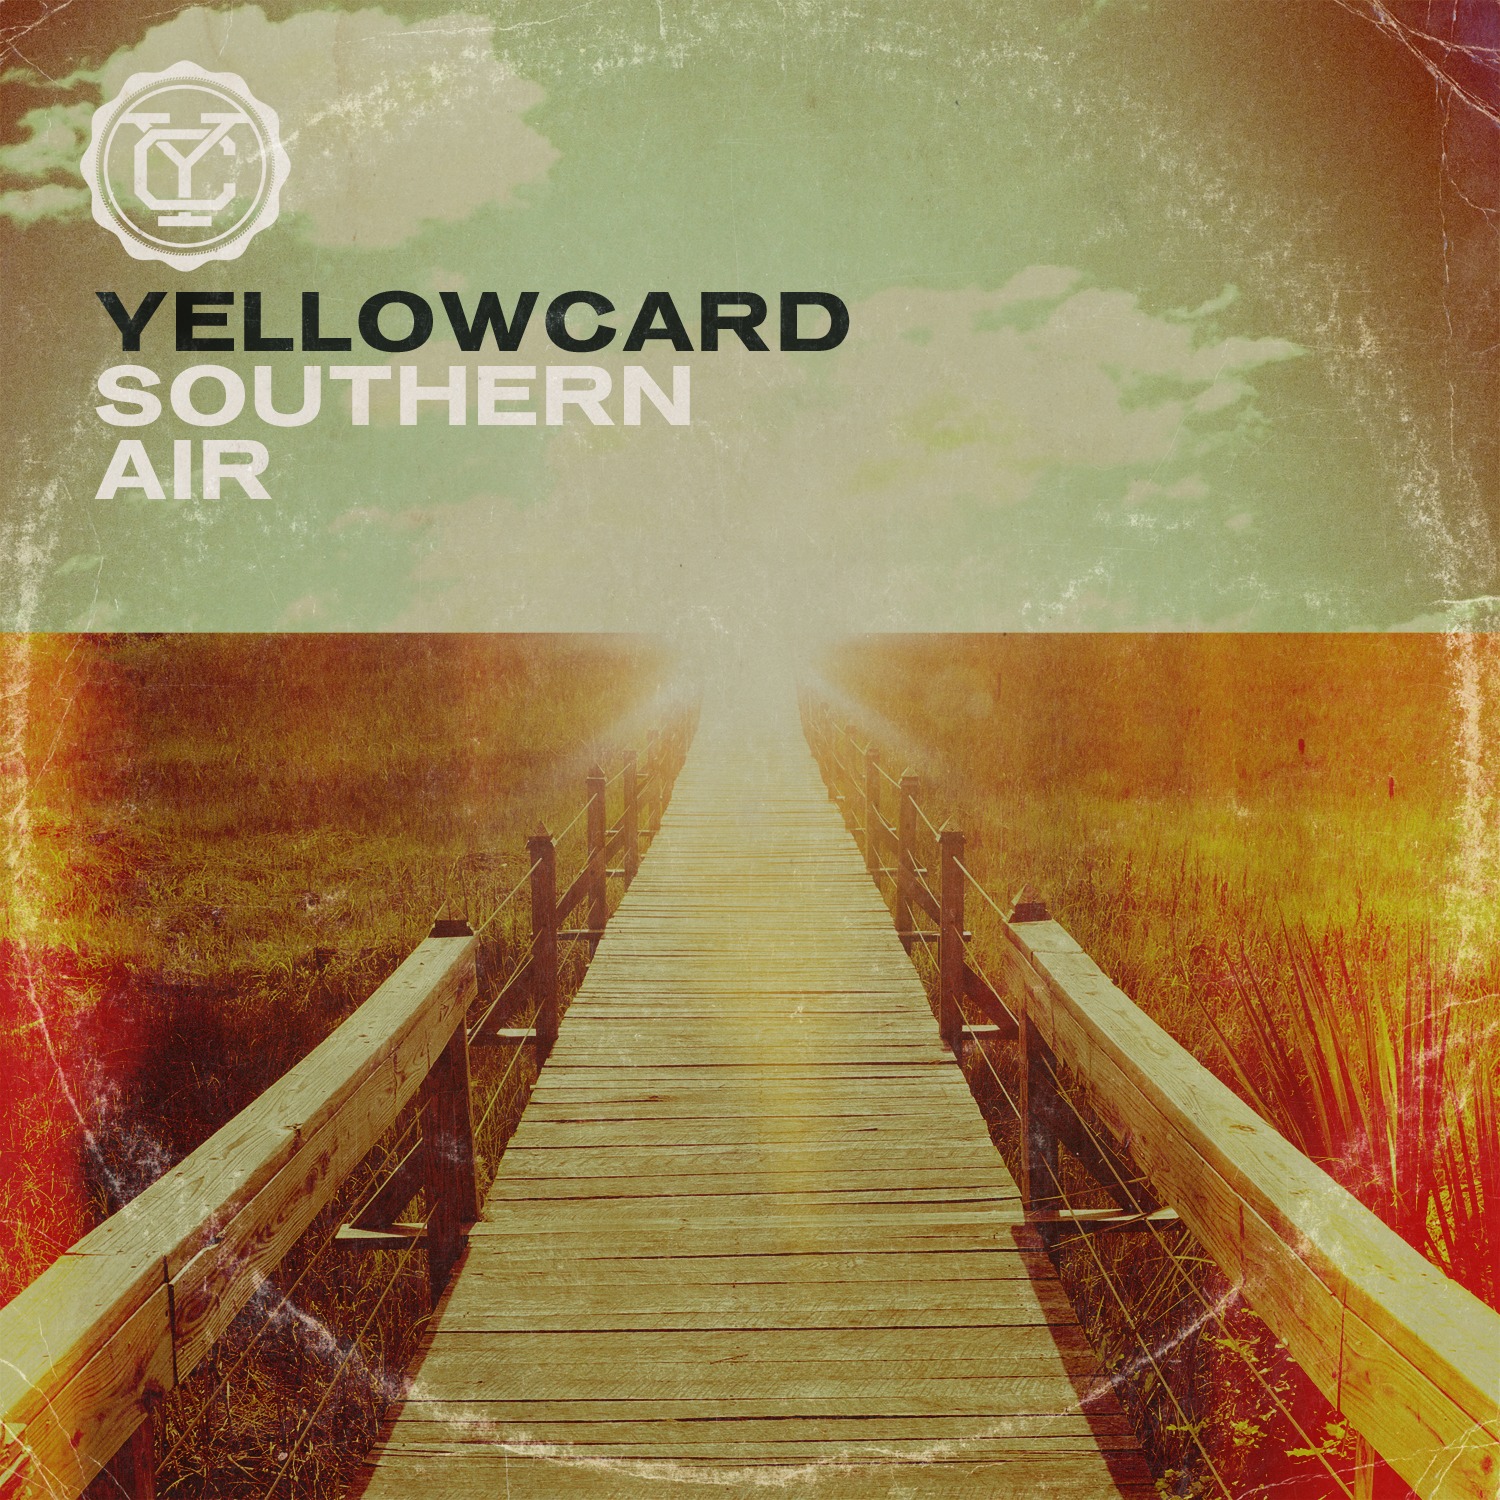 yellowcard nouvel album - Yellowcard - Southern Air (2012) YC SouthernAir artwork11